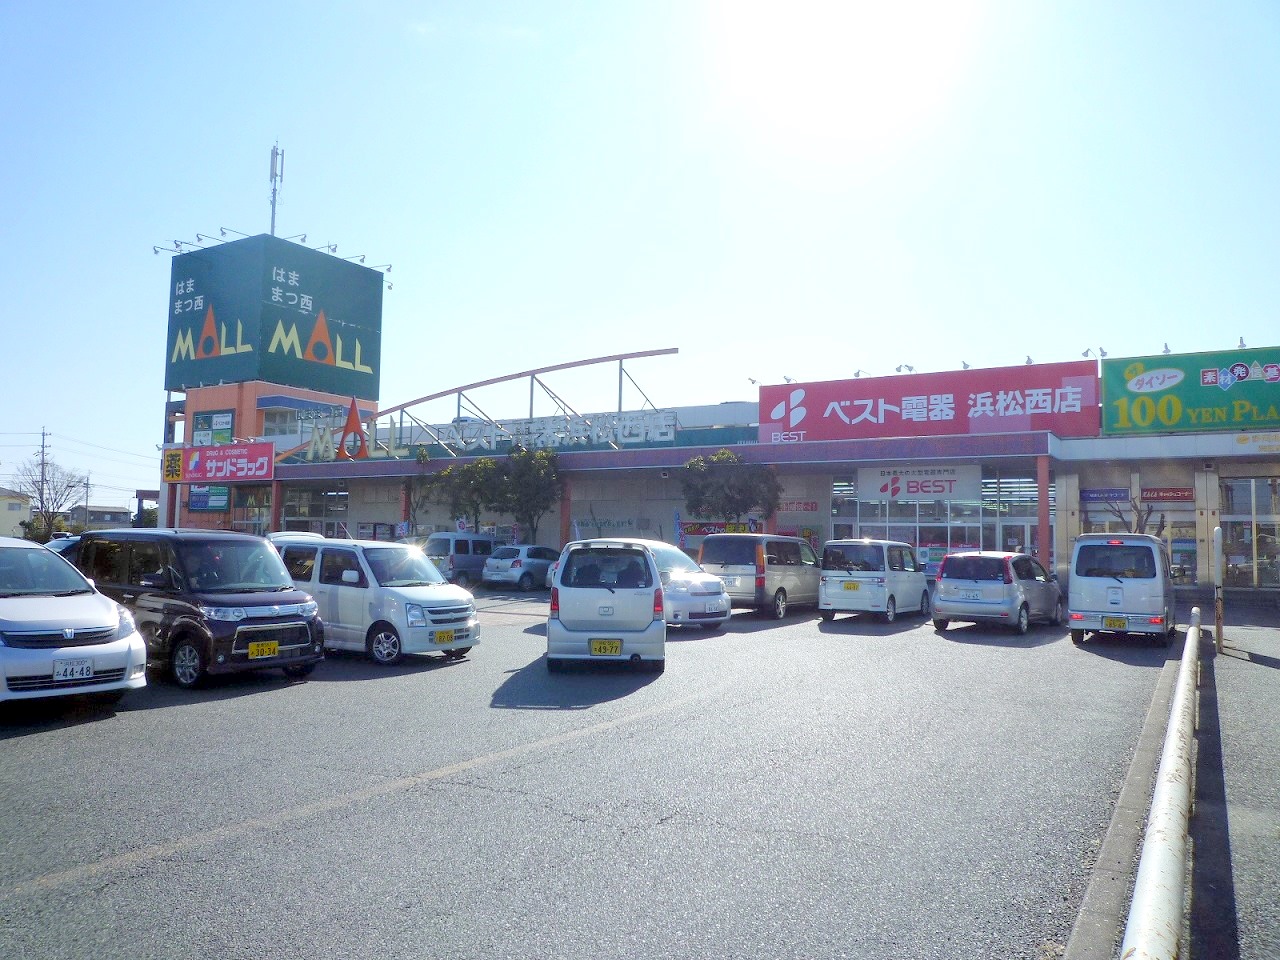 Shopping centre. 434m until Hamamatsunishi MALL (shopping center)